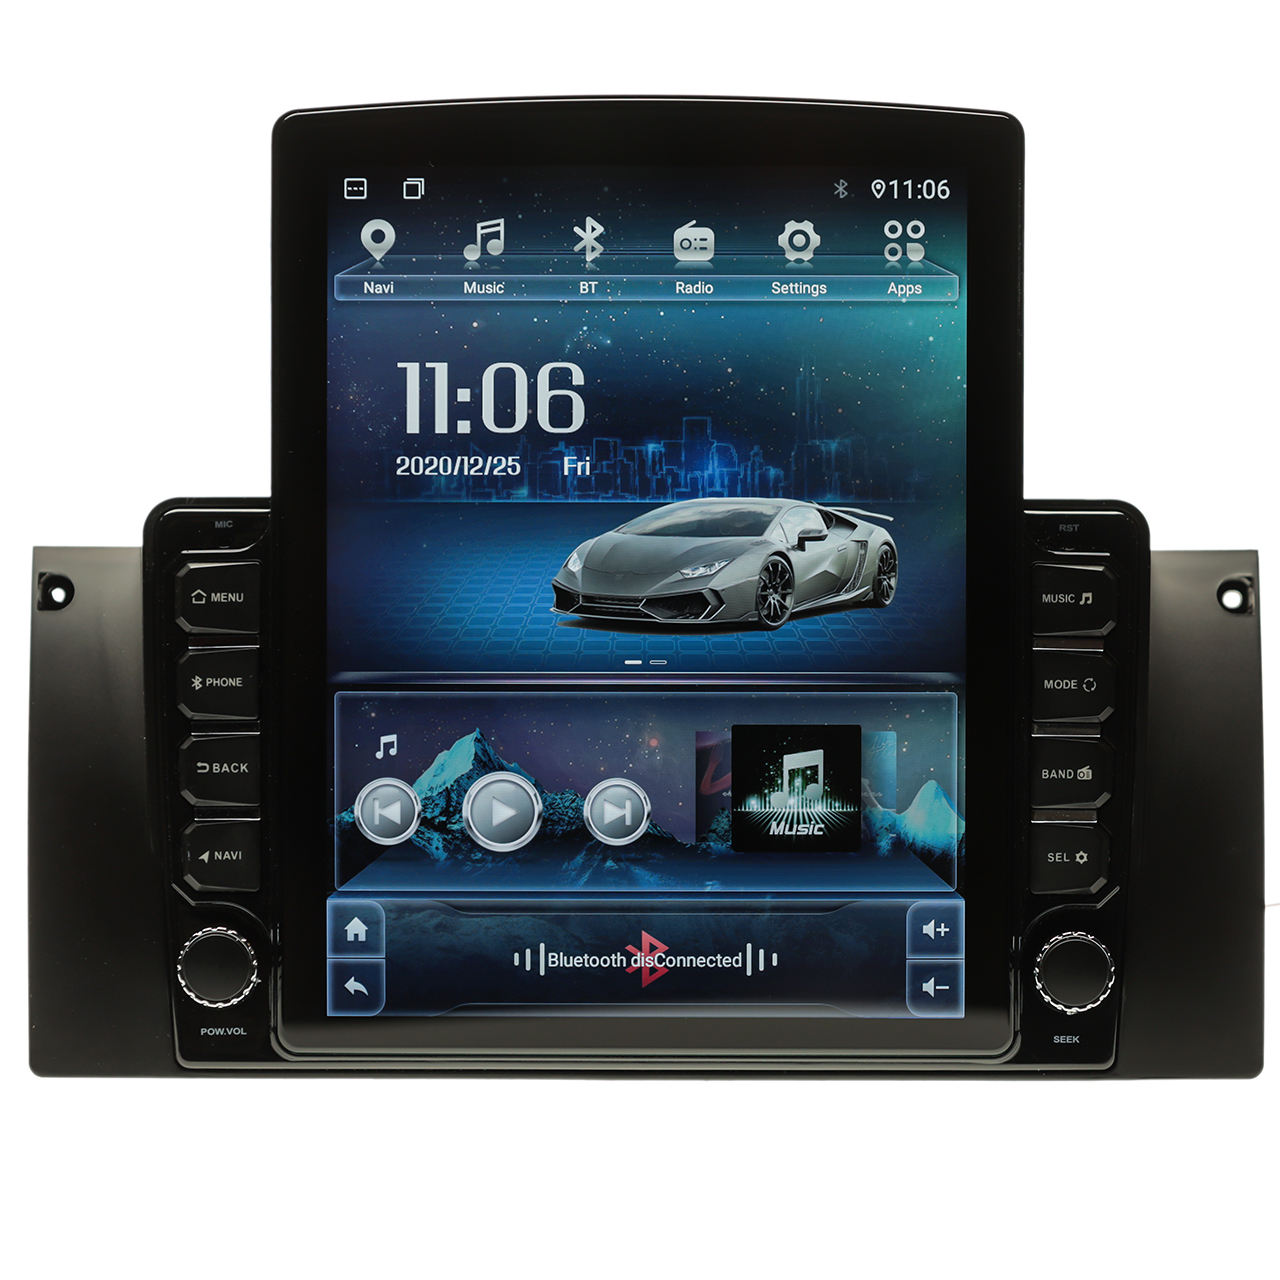 Navigatie AUTONAV ECO Android GPS Dedicata BMW E39, Model XPERT Memorie 16GB Stocare, 1GB DDR3 RAM, Butoane Si Volum Fizice, Display Vertical Stil Tesla 10